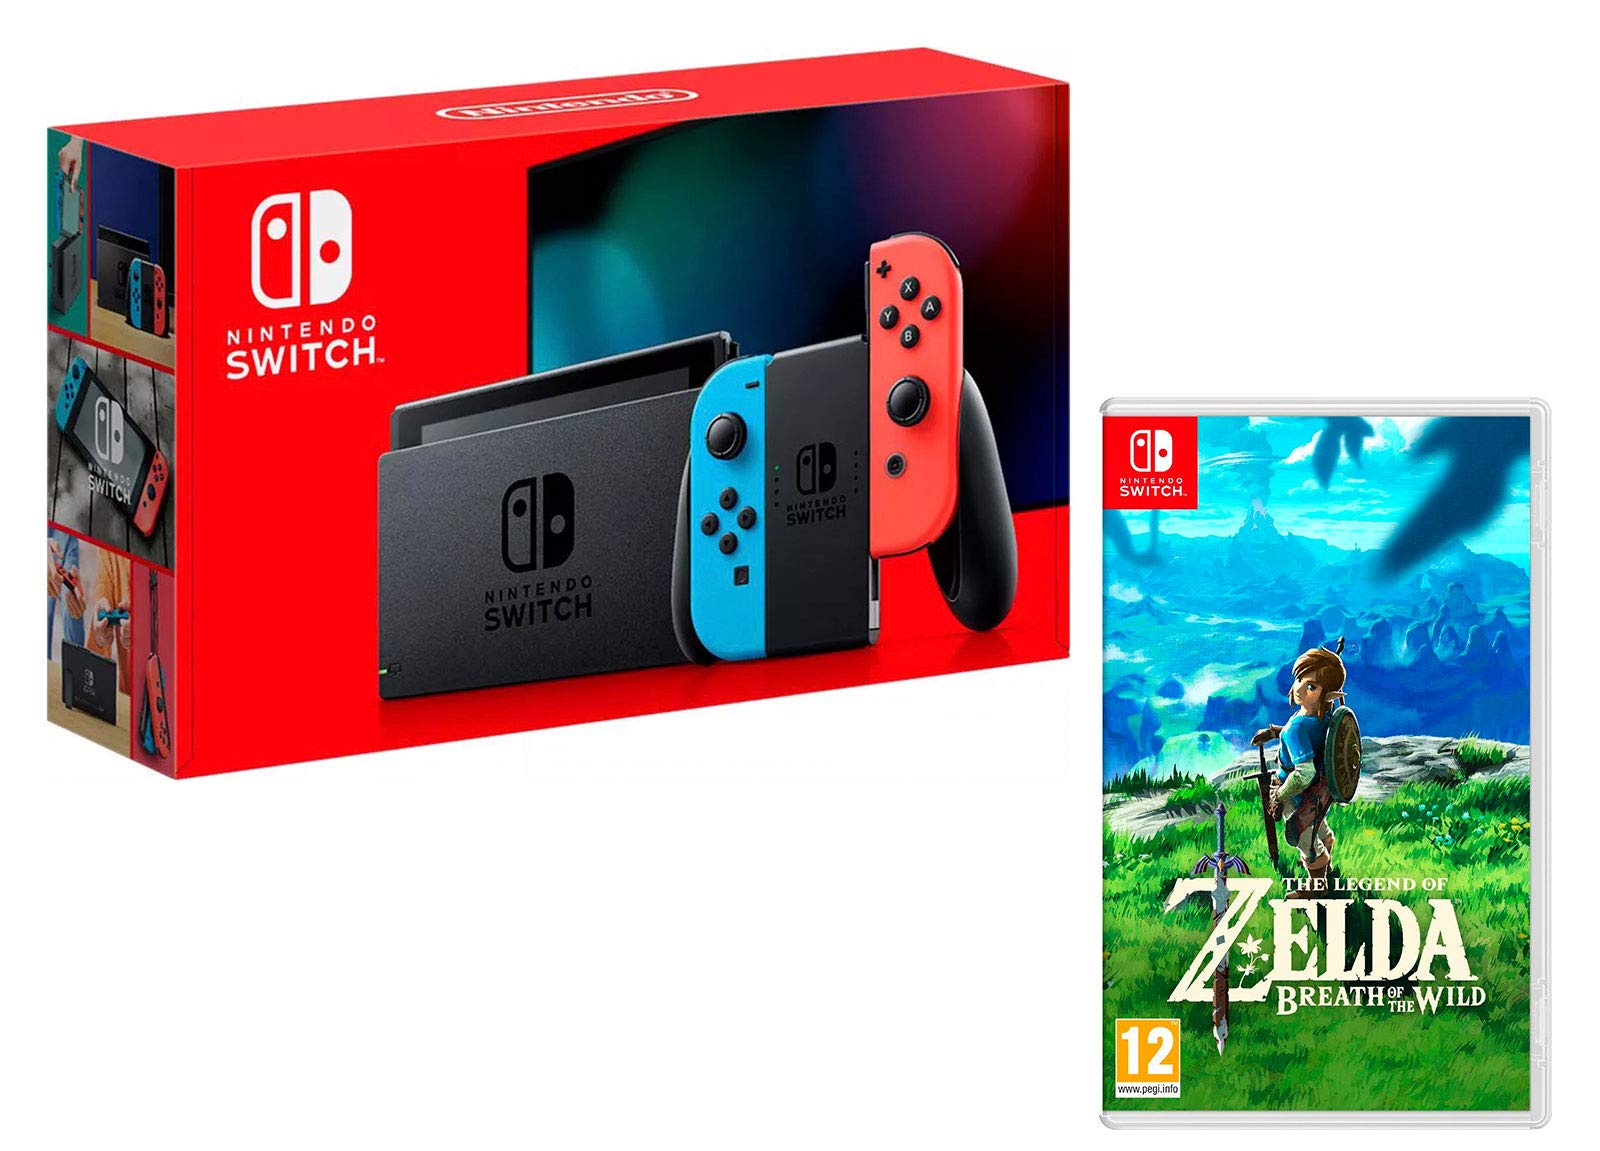 Nintendo Switch Konsole 32Gb Neon-Rot/Neon-Blau [Neues Model] + The Legend of Zelda: Breath of The Wild